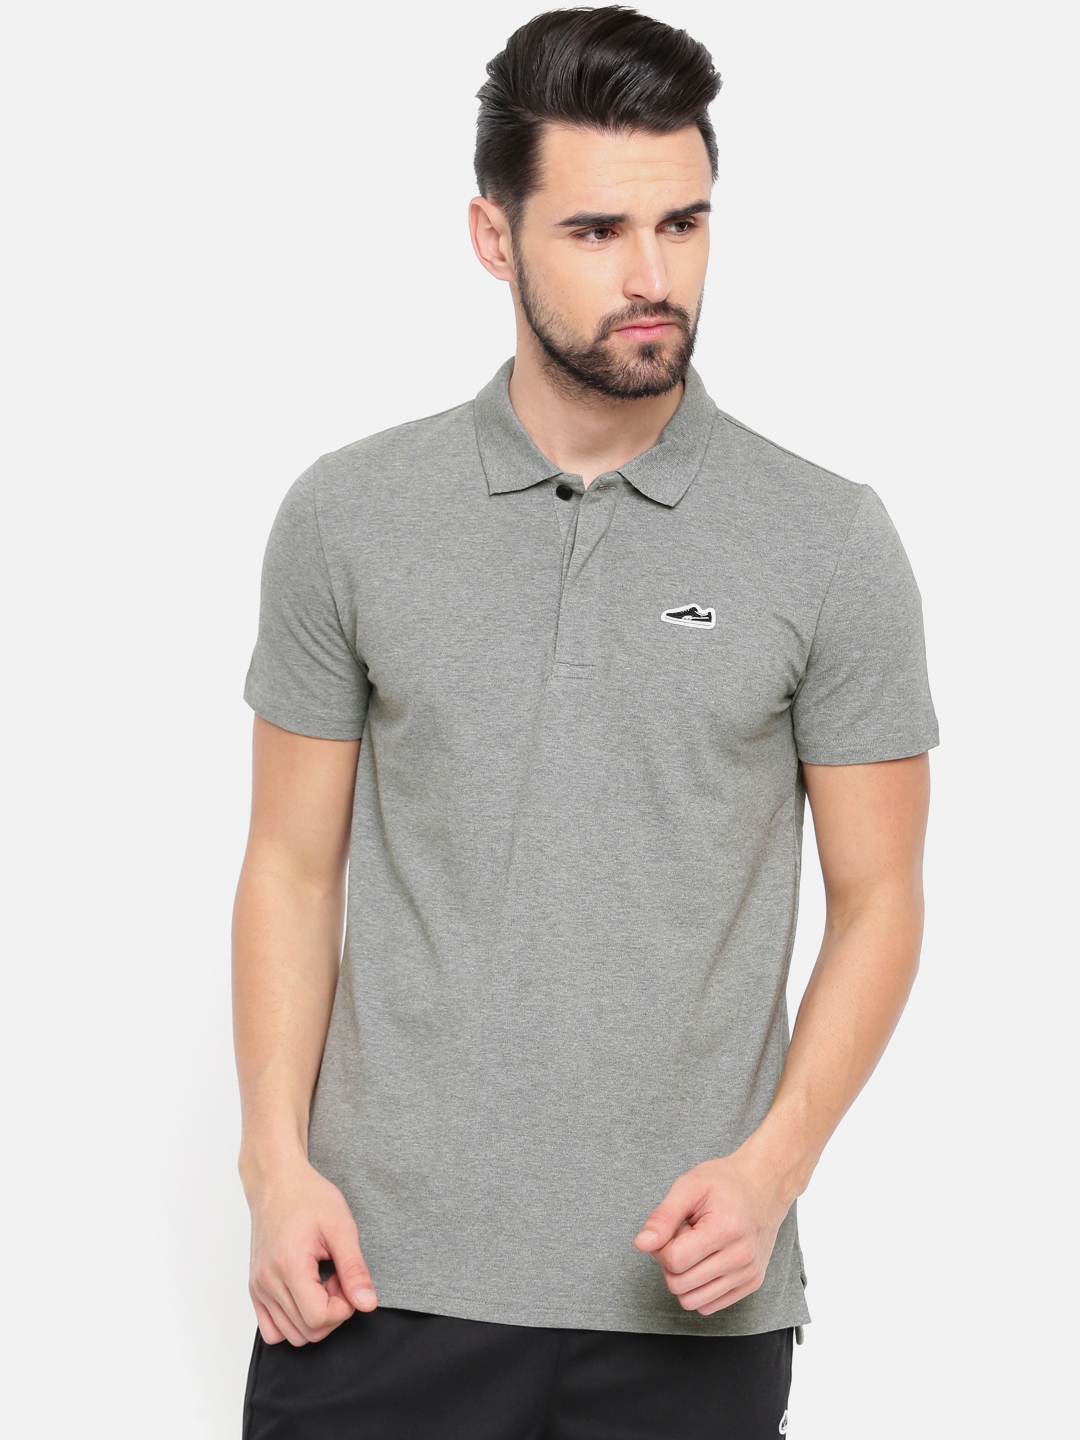 Buy Puma Men Grey Melange Solid Suede Collar T Shirt - for Men 8172629 | Myntra